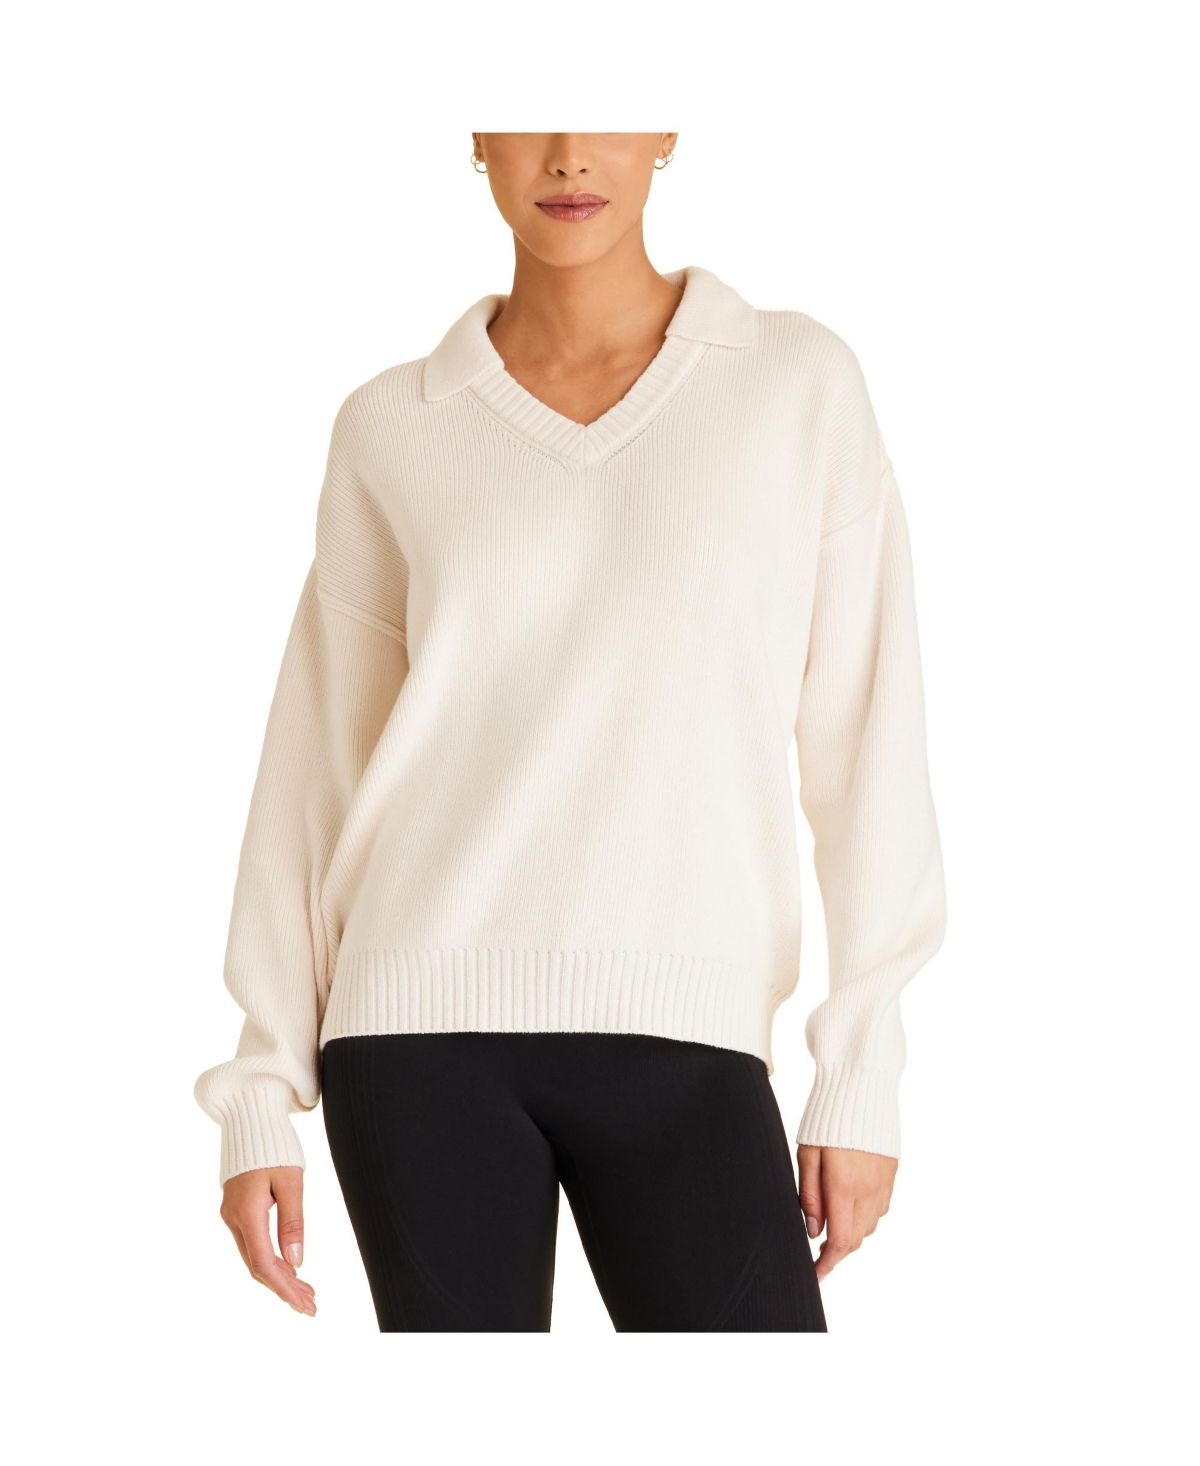 Adult Women Diana Sweater - Camel